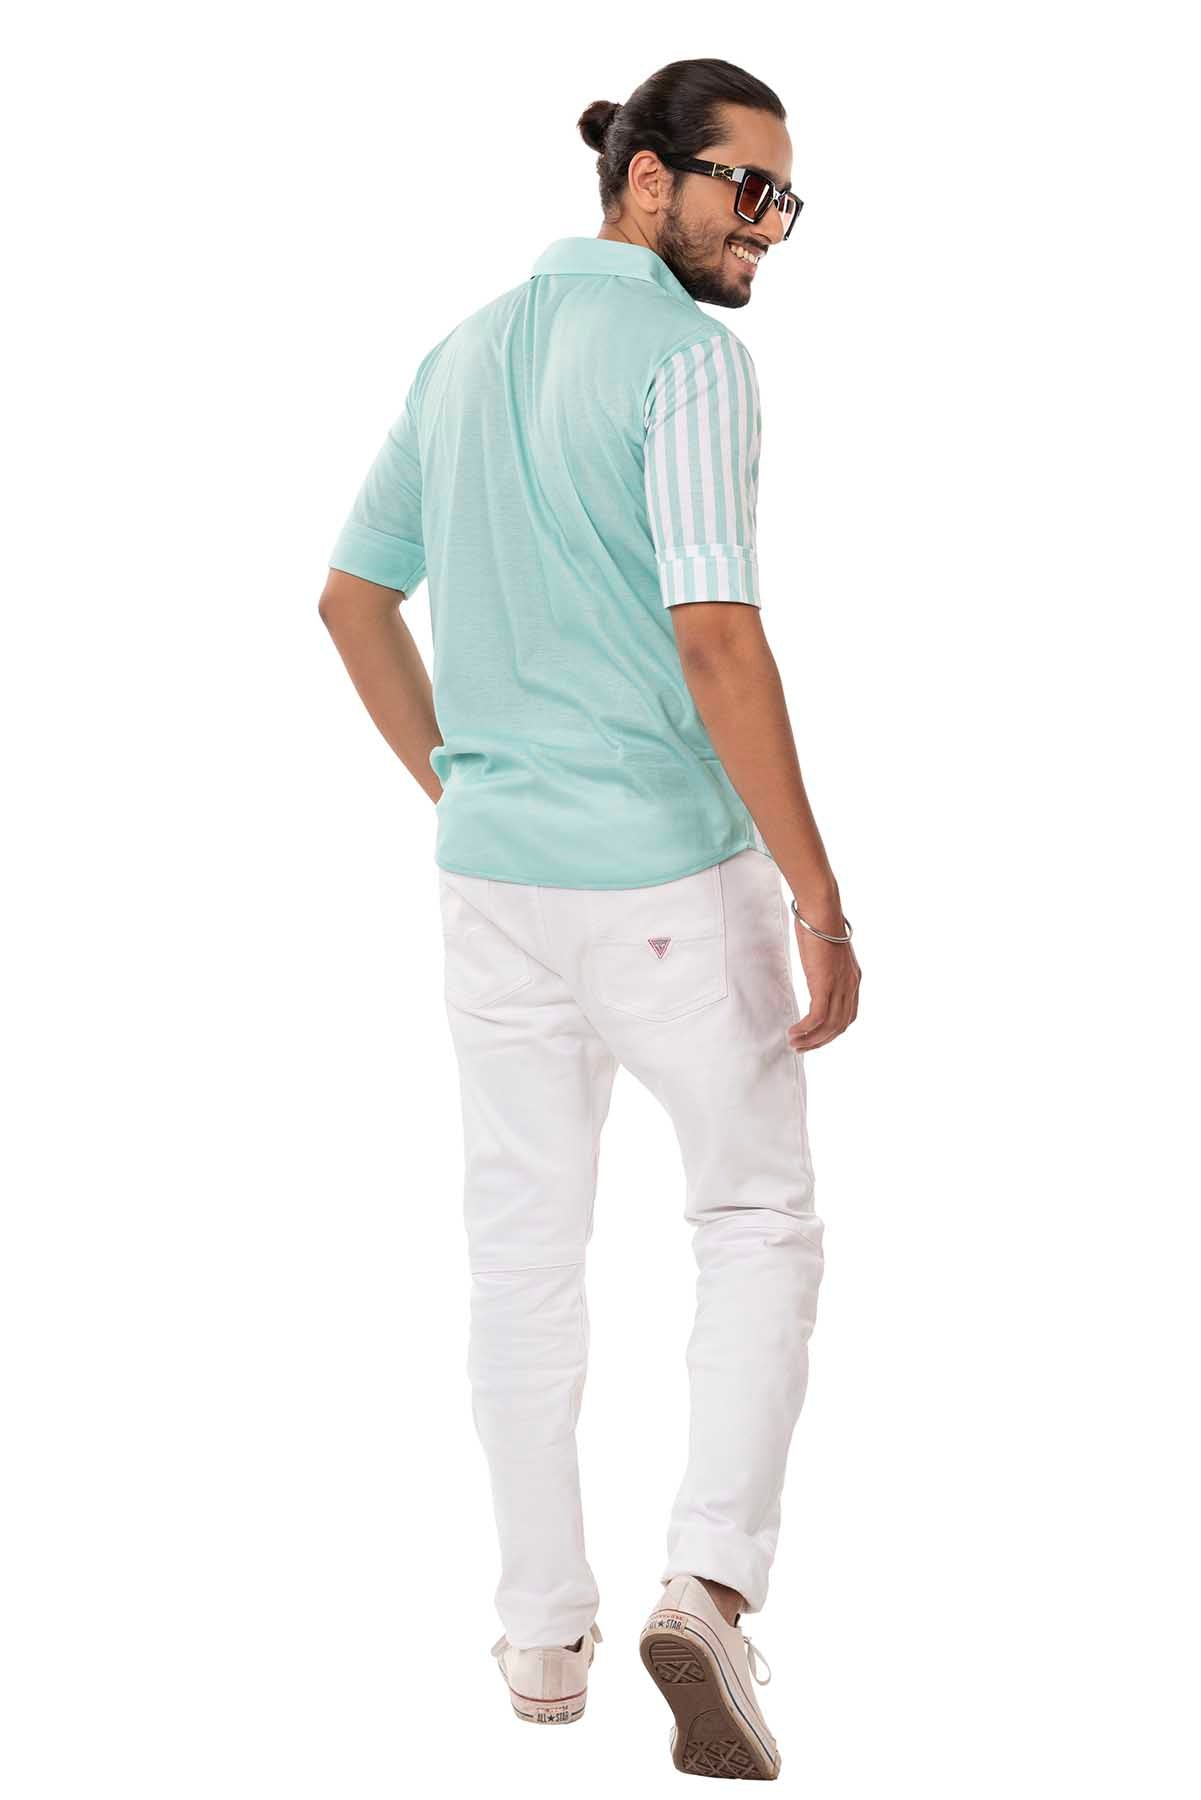 Tiffany Blue Green Aquamarine Asymmetric White Vertical Stripes Regular Fit Shirtee